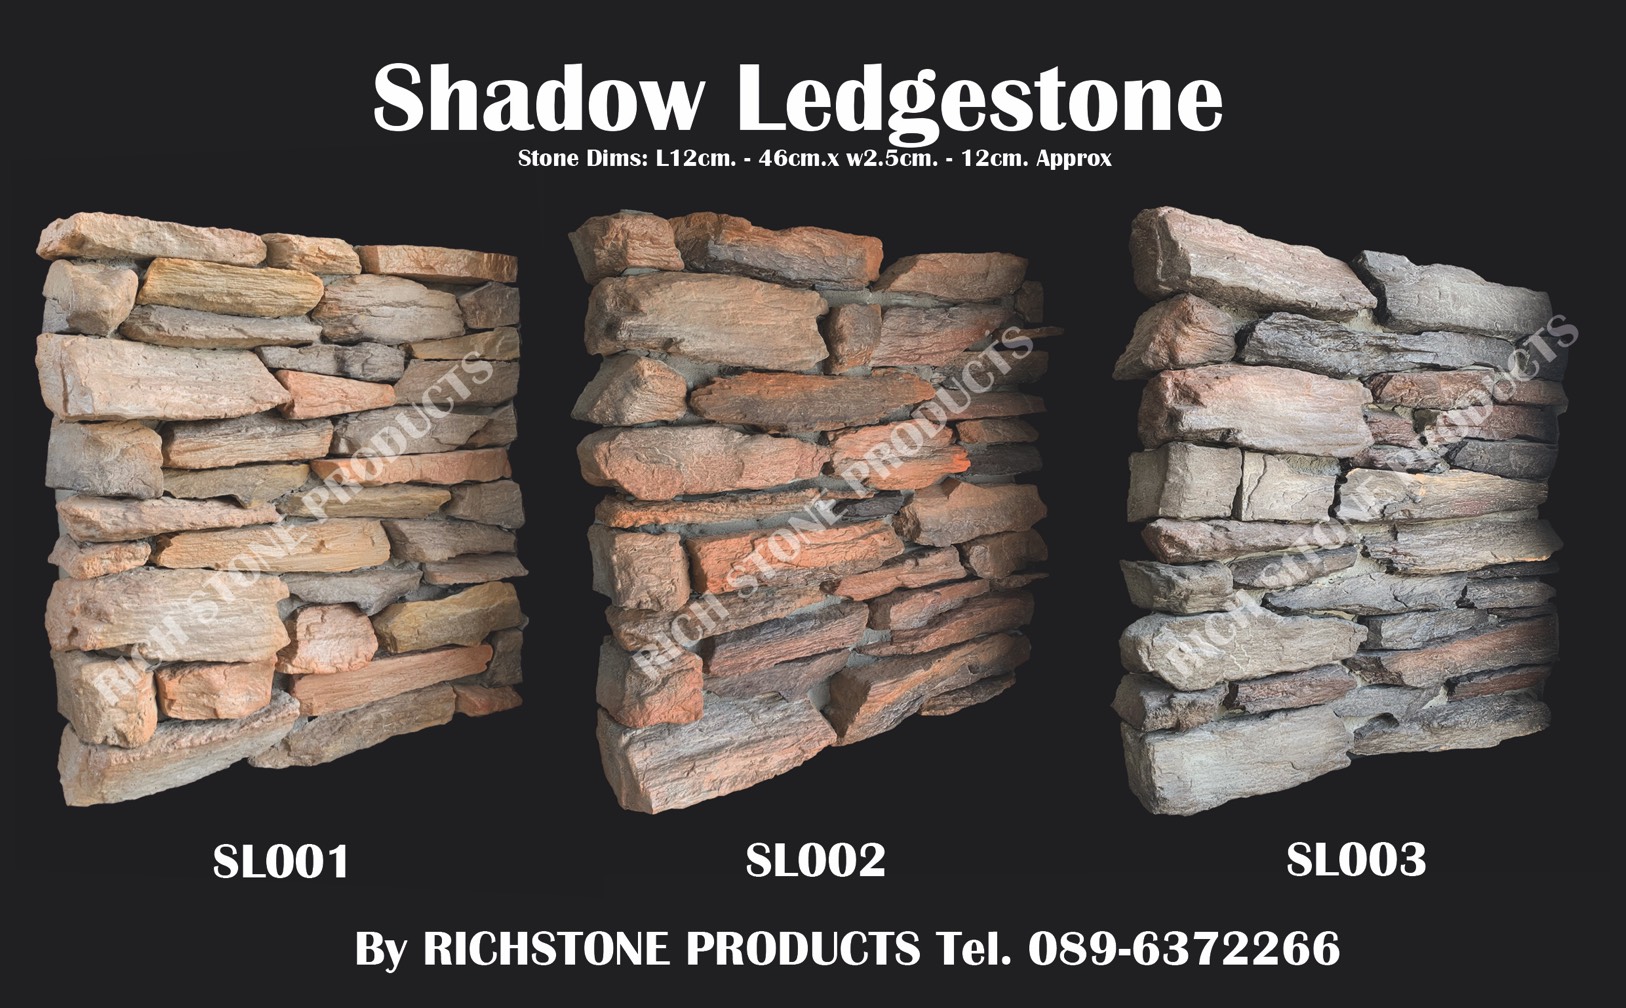 Shadow Ledgestone